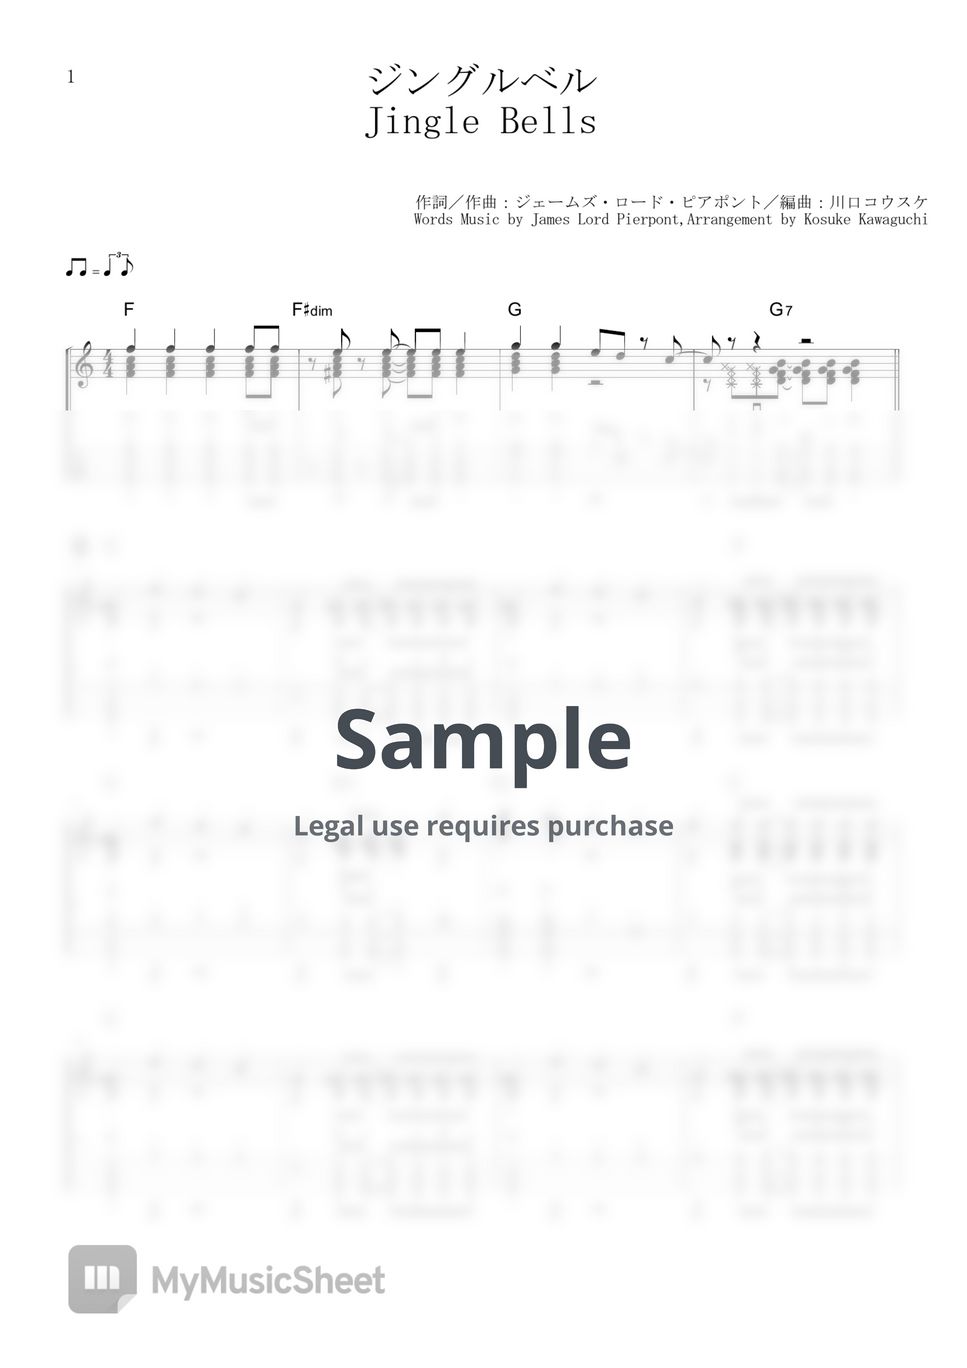 James Lord Pierpont - Jingle Bells (Solo ukulele/TAB) by Kosuke Kawaguchi